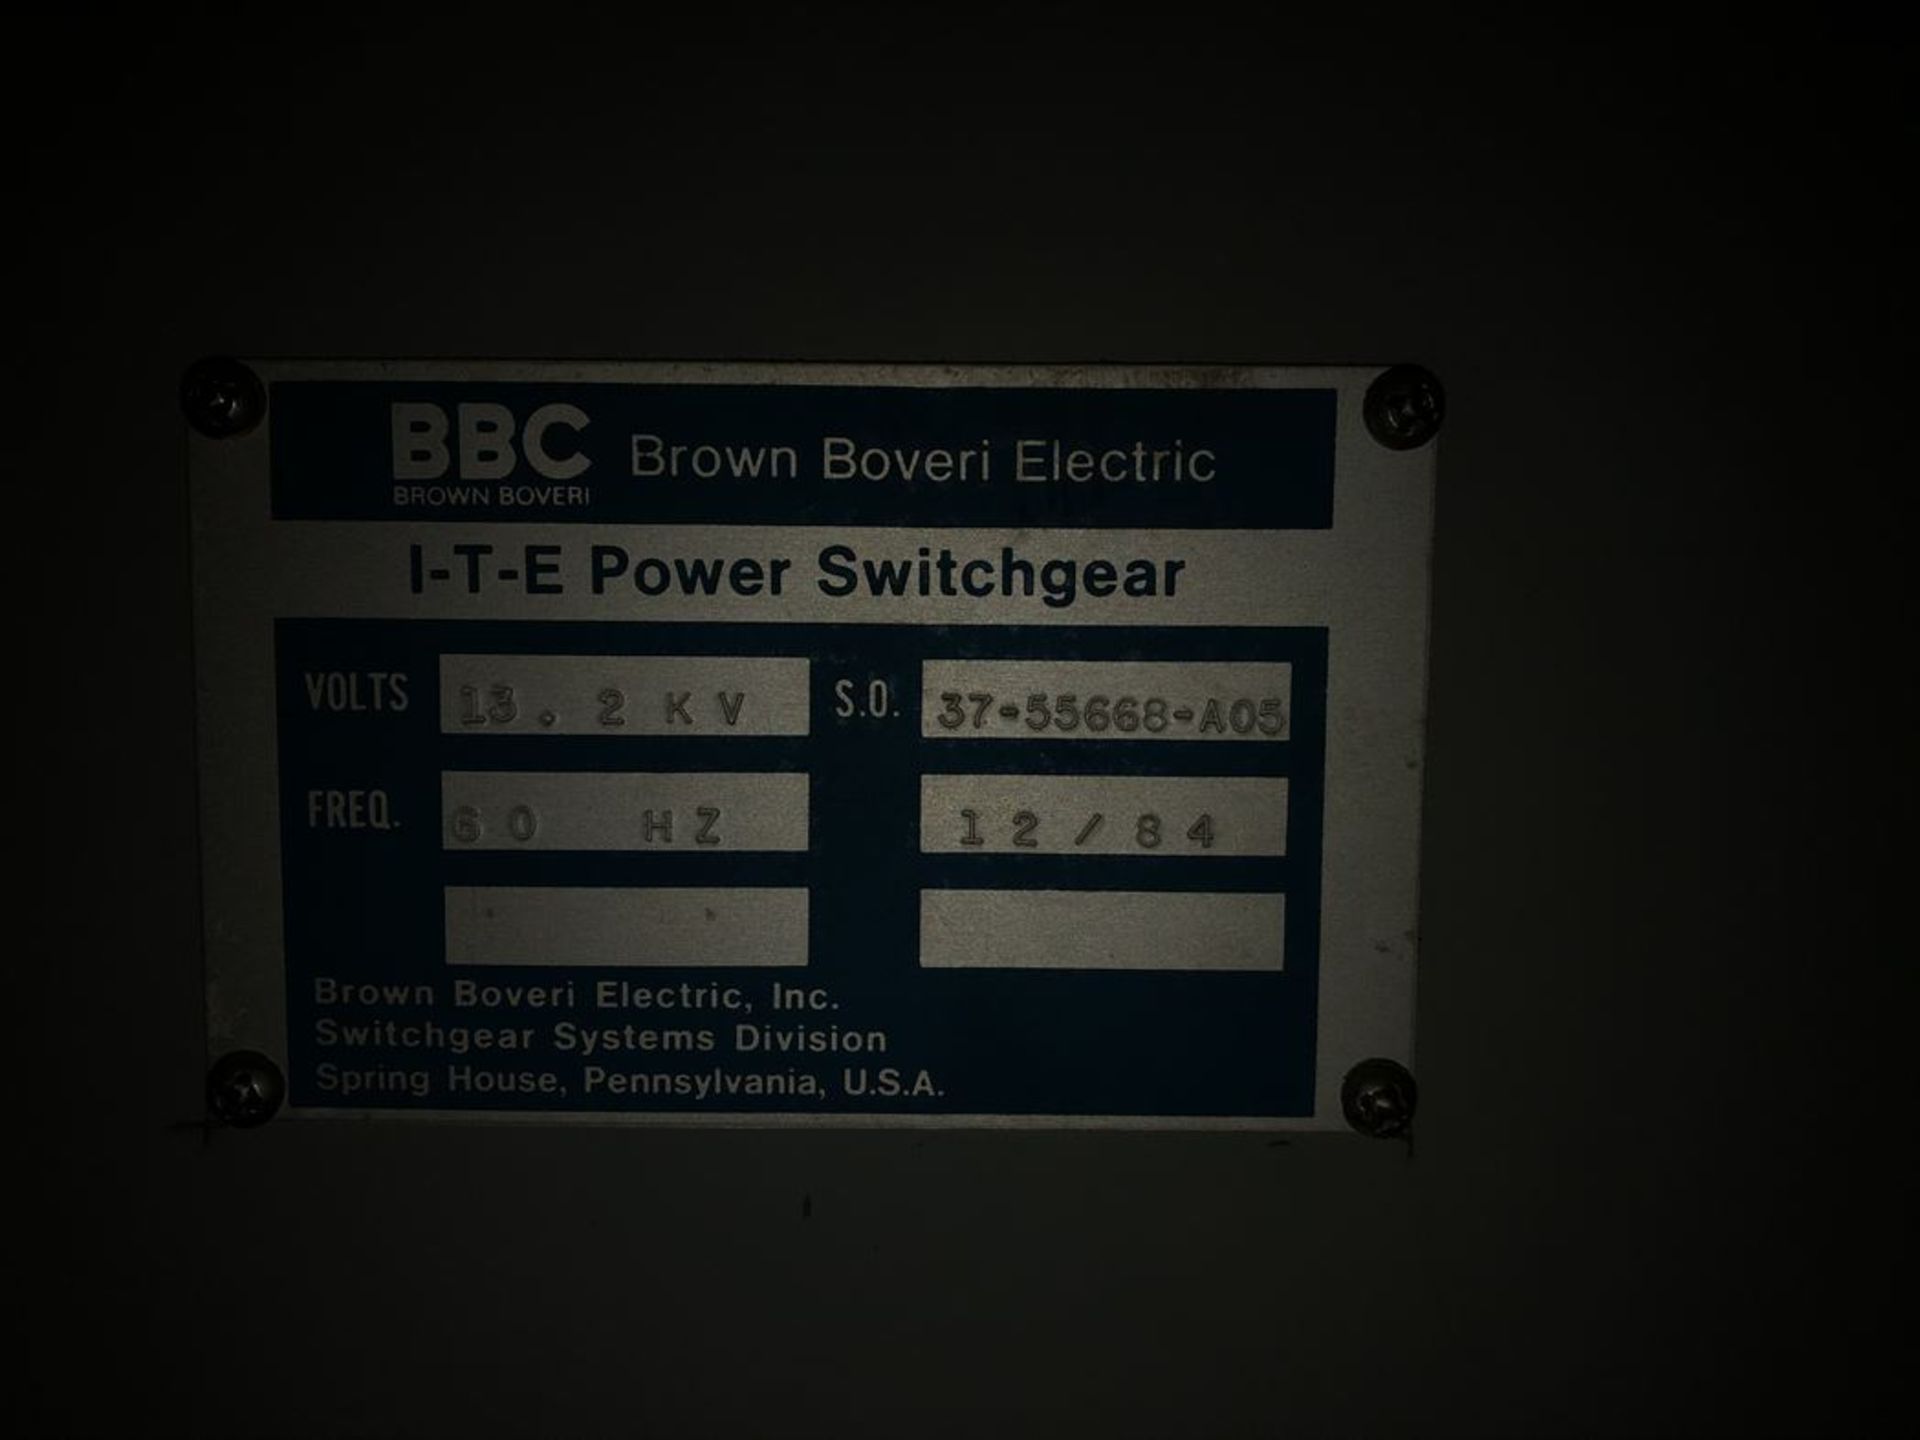 BBC I-T-E Power Switchgear, 13.2 KV - Image 5 of 5